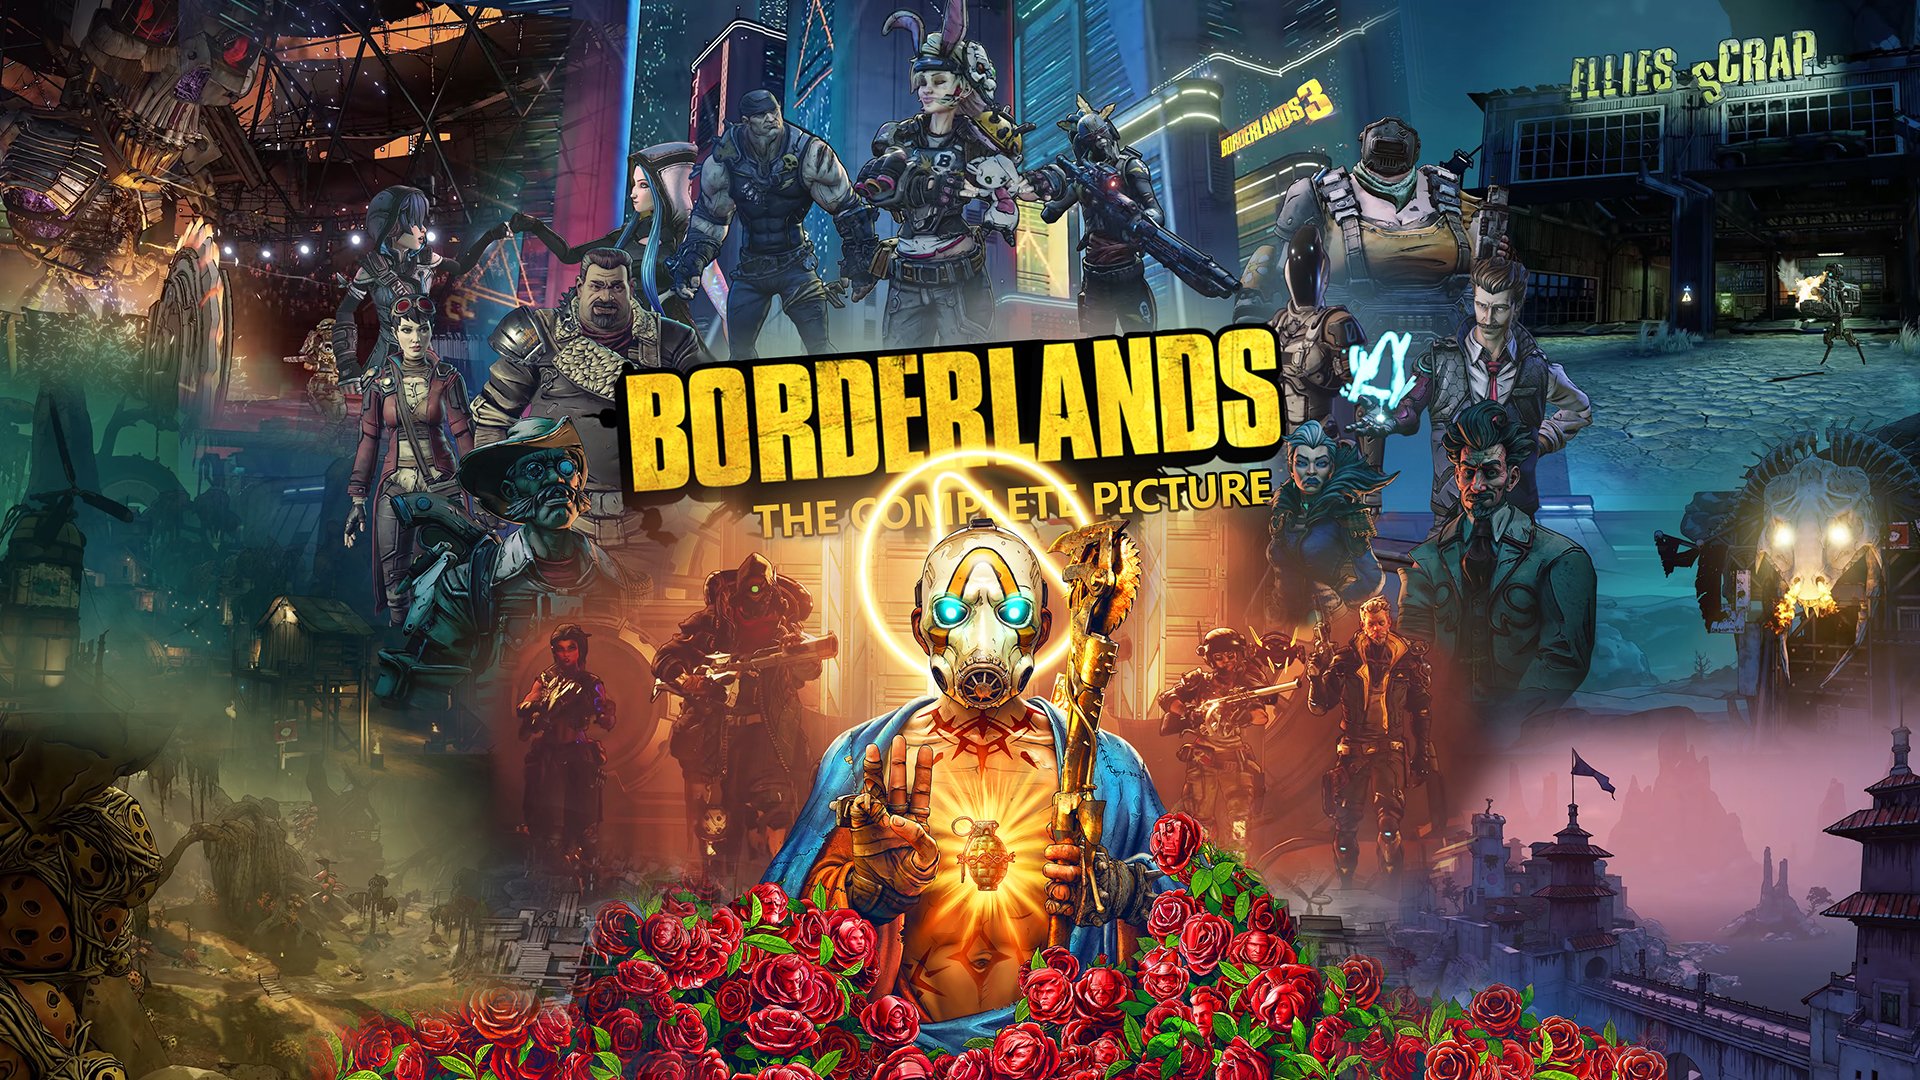 Borderlands 3